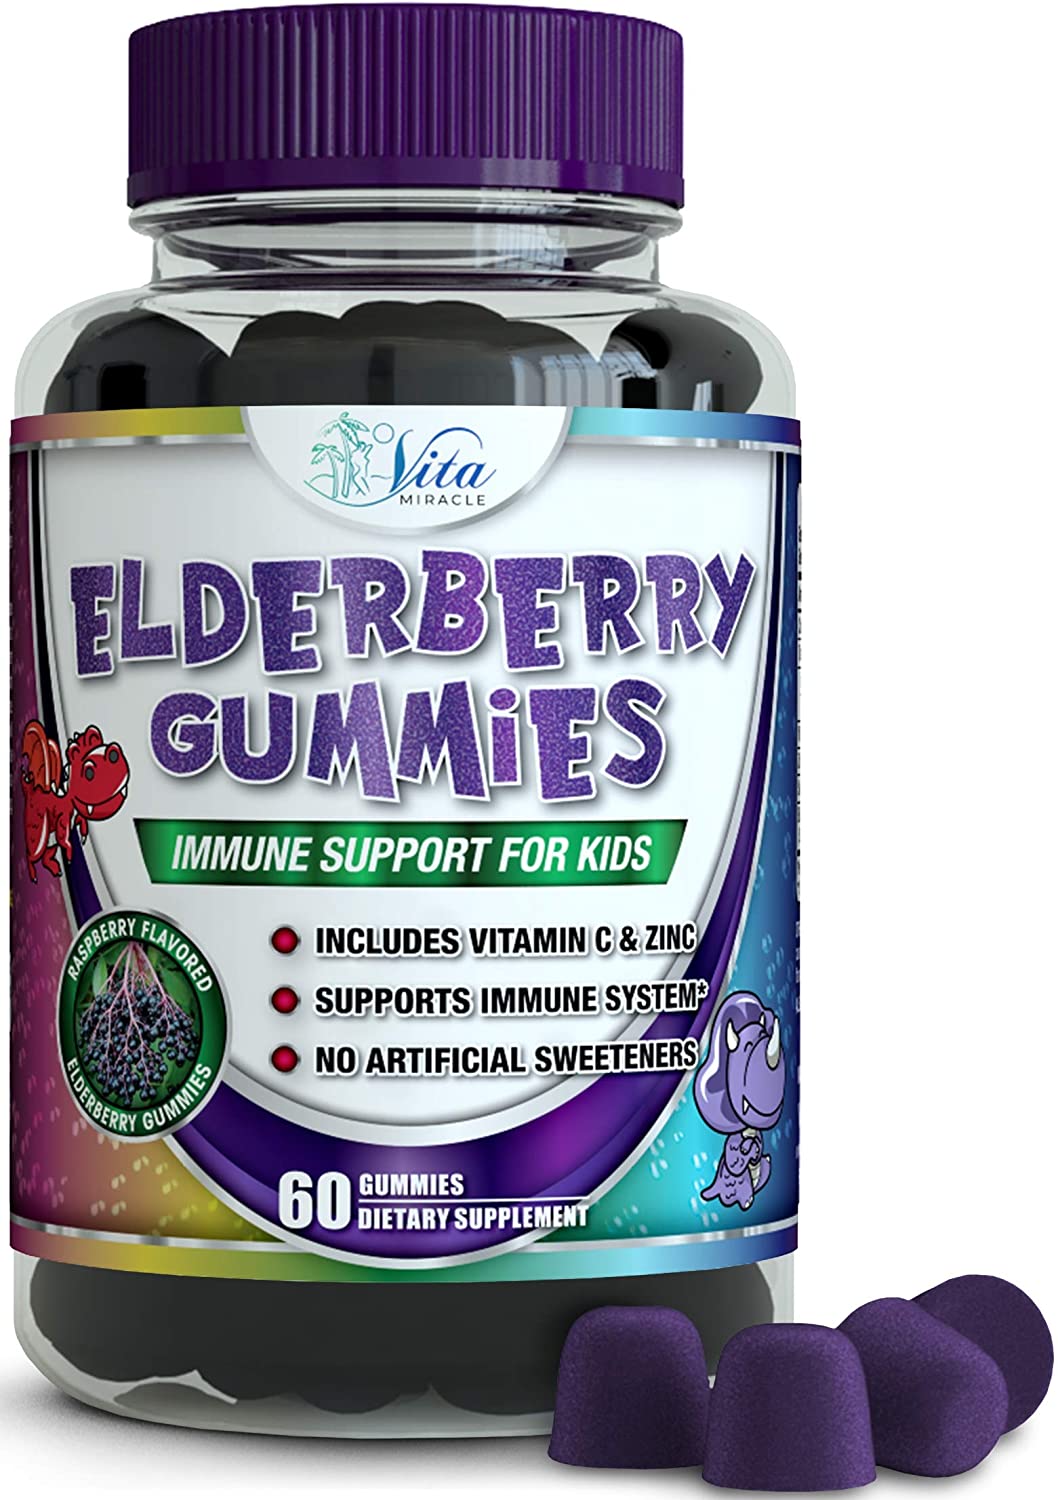 10. Sambucus Elderberry Gummies